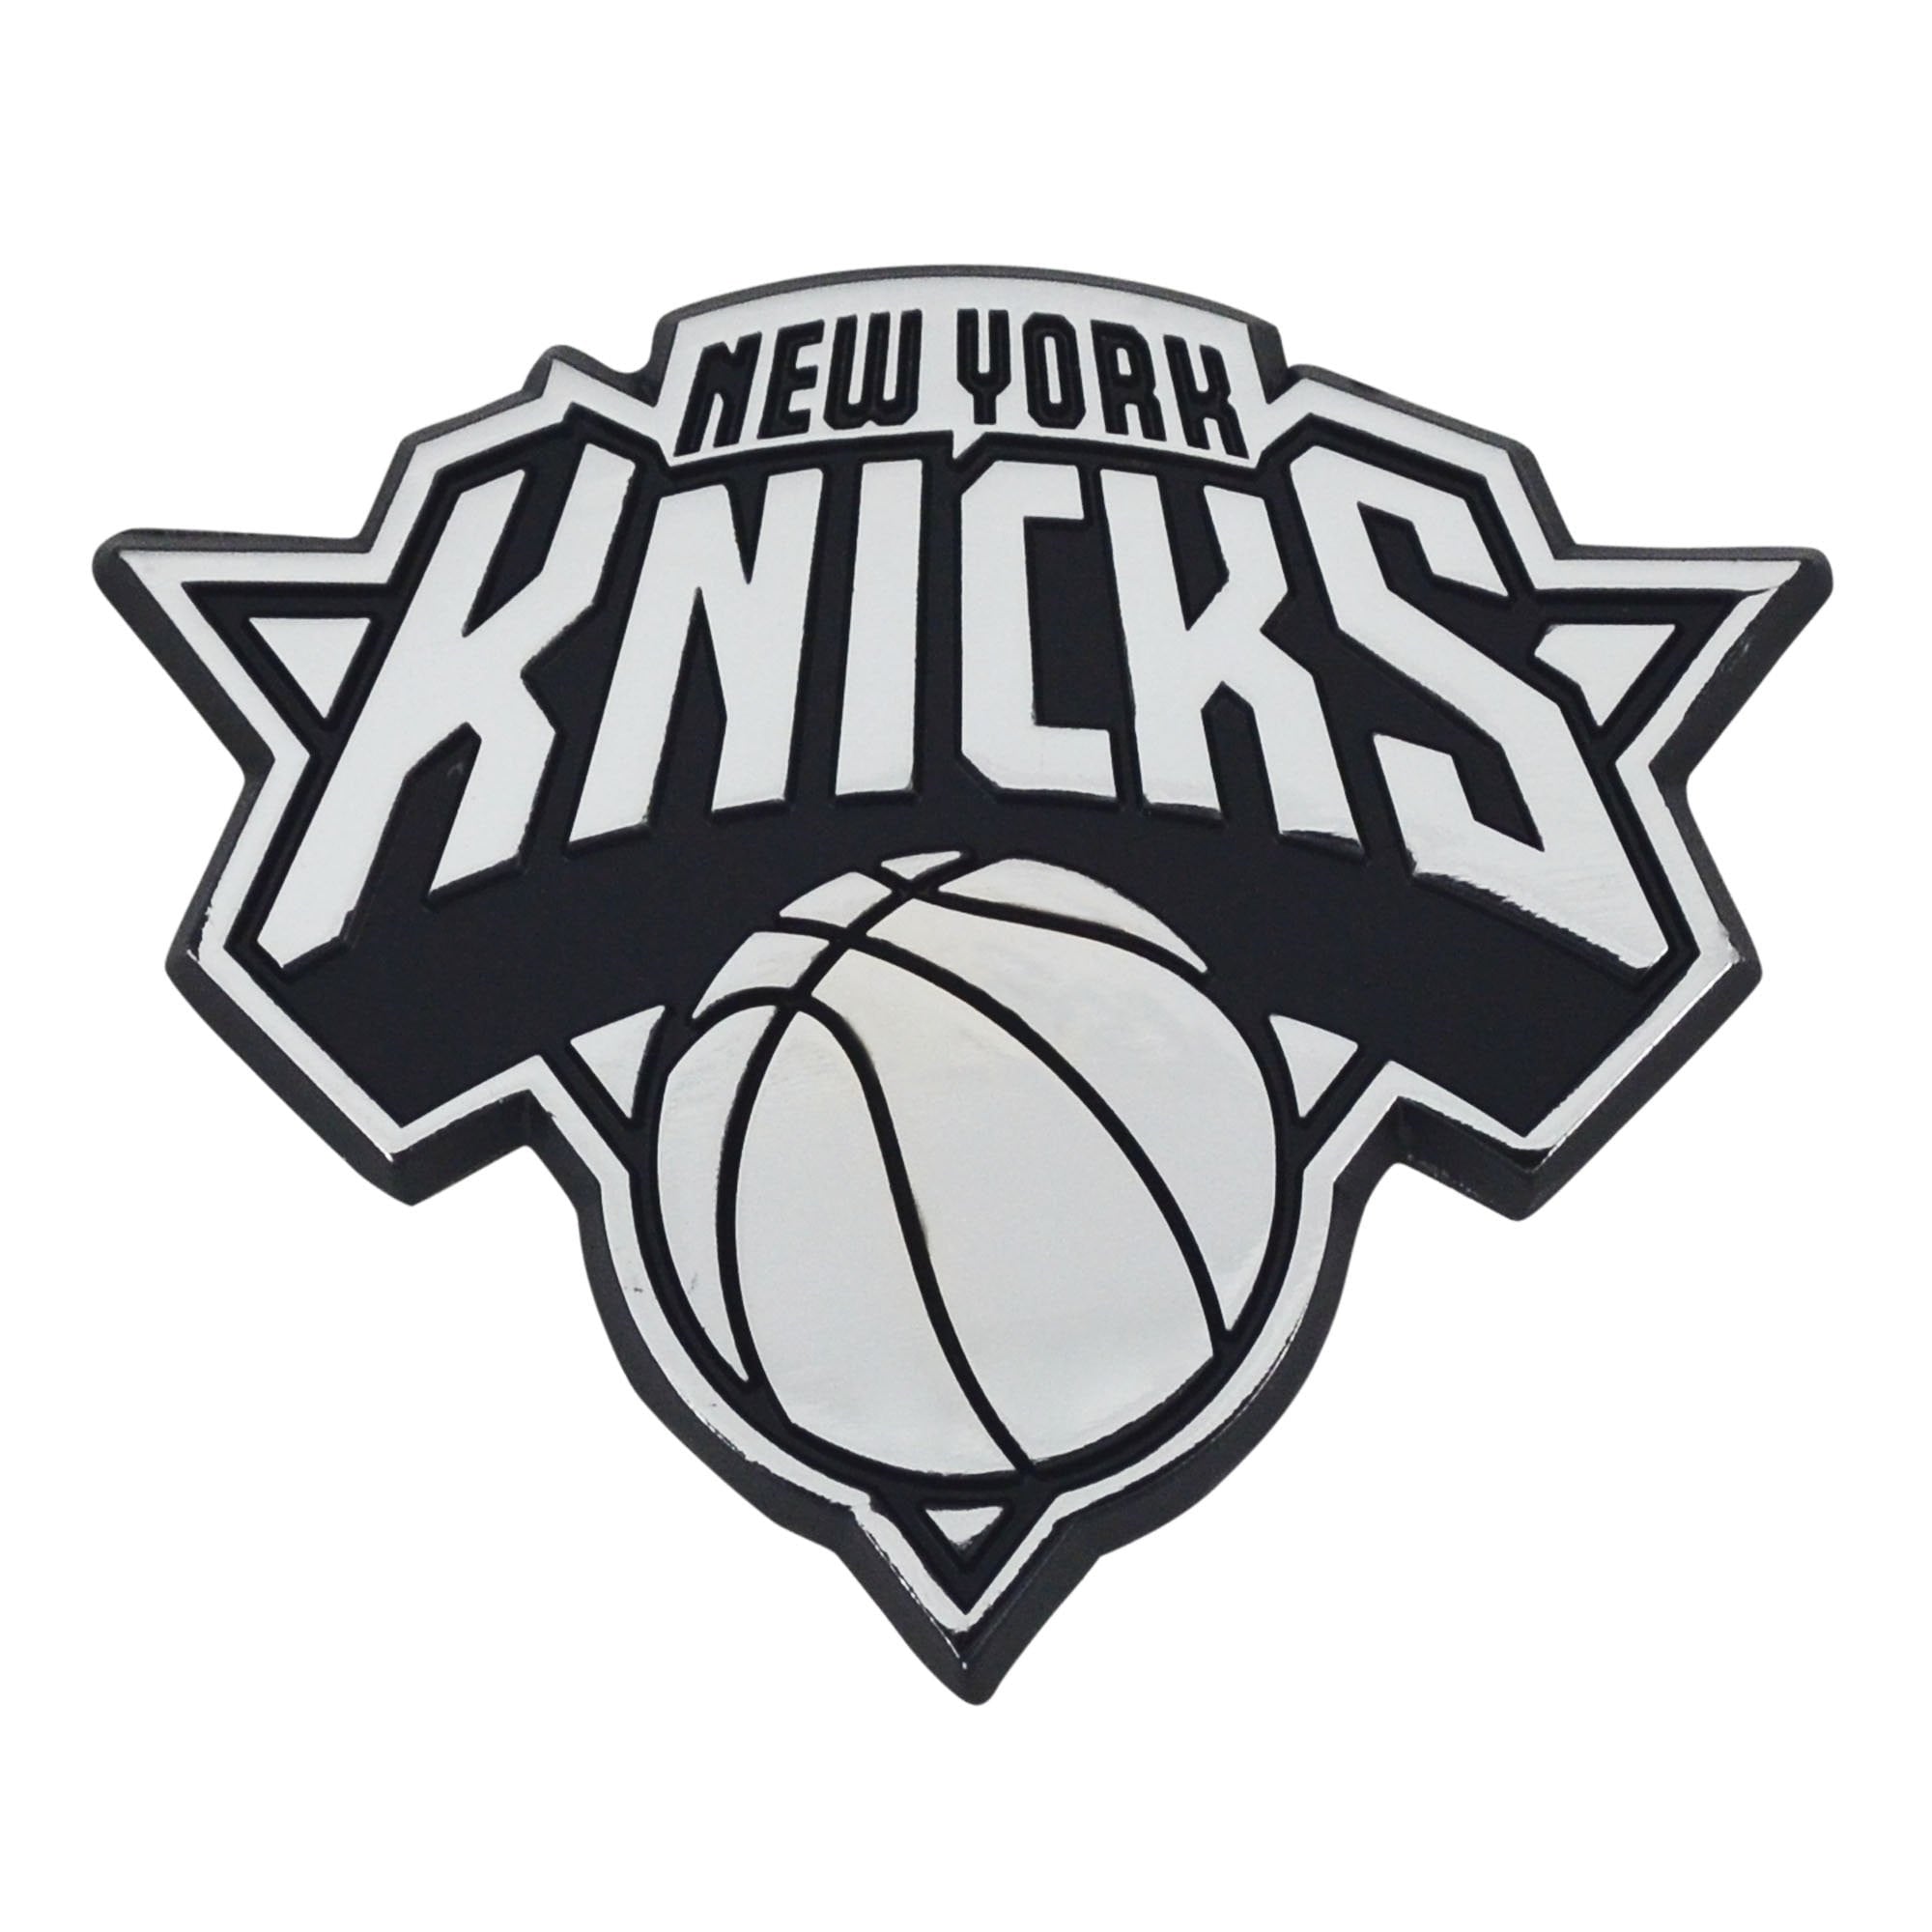 New York Knicks 3D Chrome Emblem